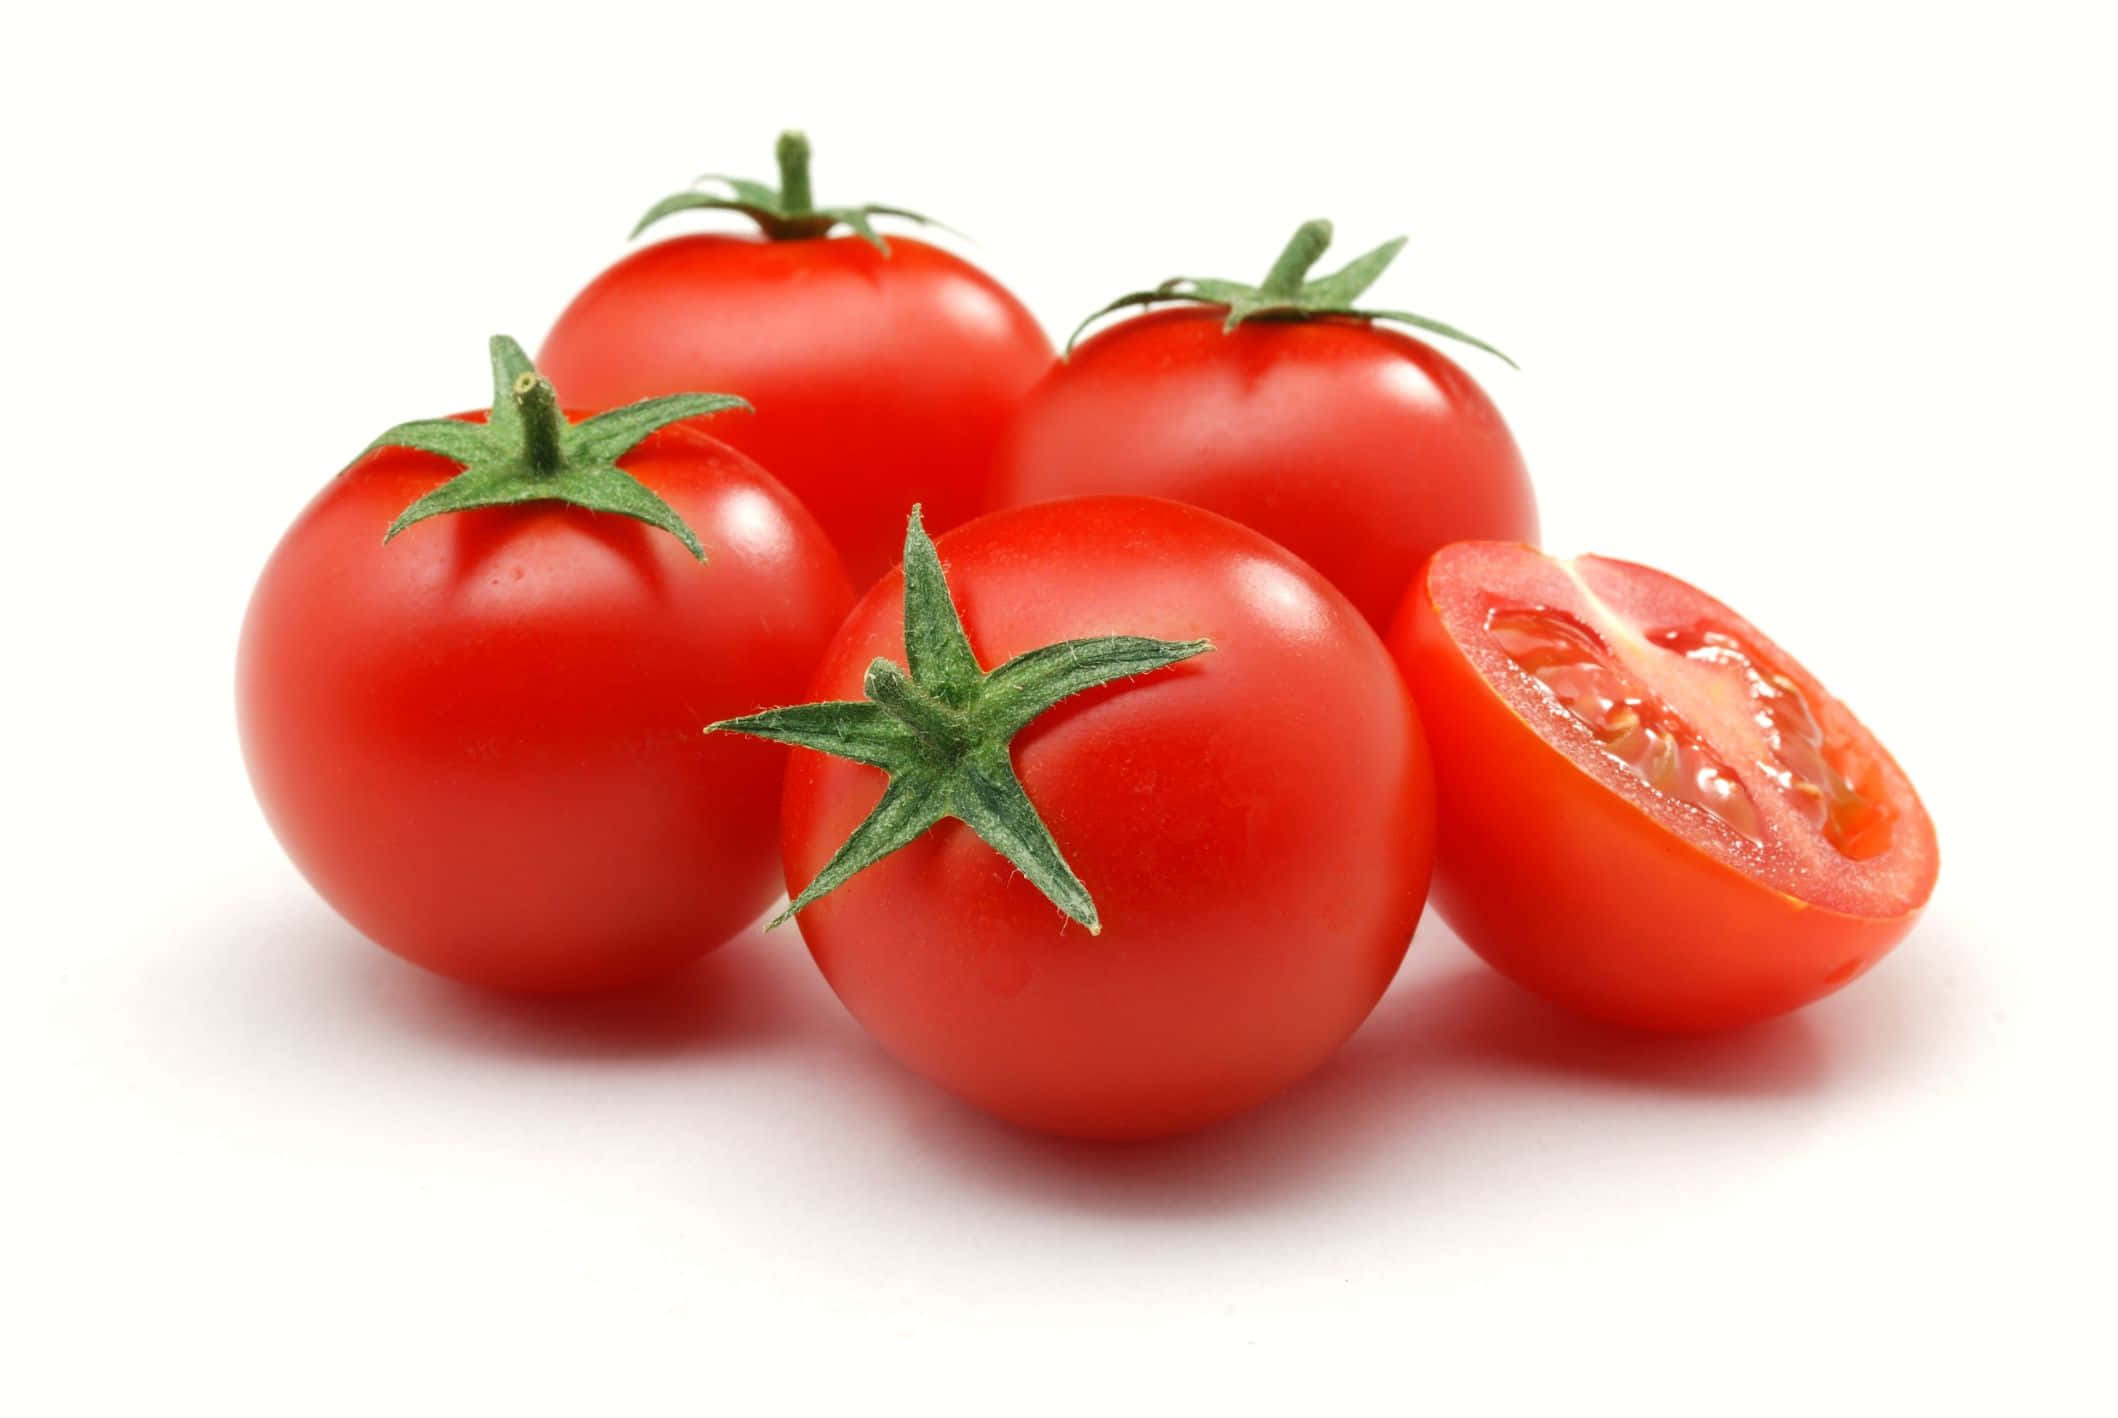 A juicy red tomato glistening in the sun